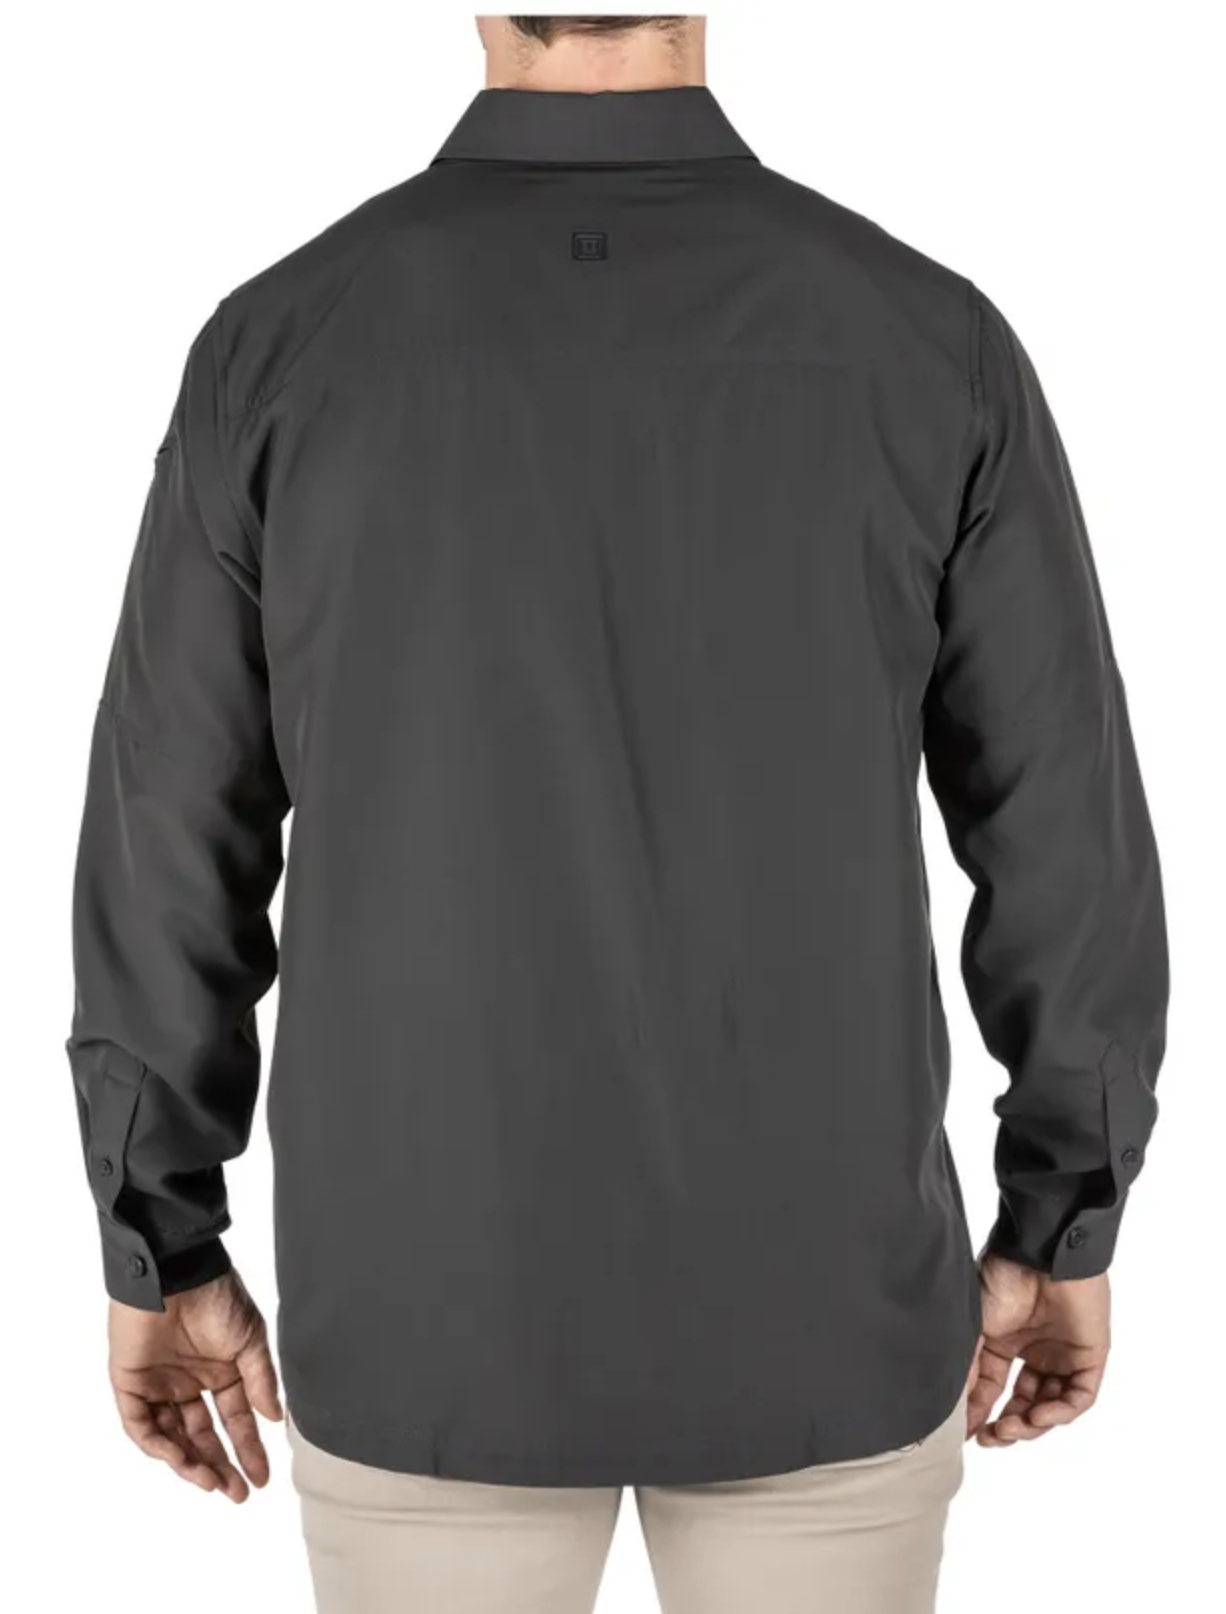 5.11 - Marksman Long Sleeve Shirt UPF 50+ - Volcanic (098)